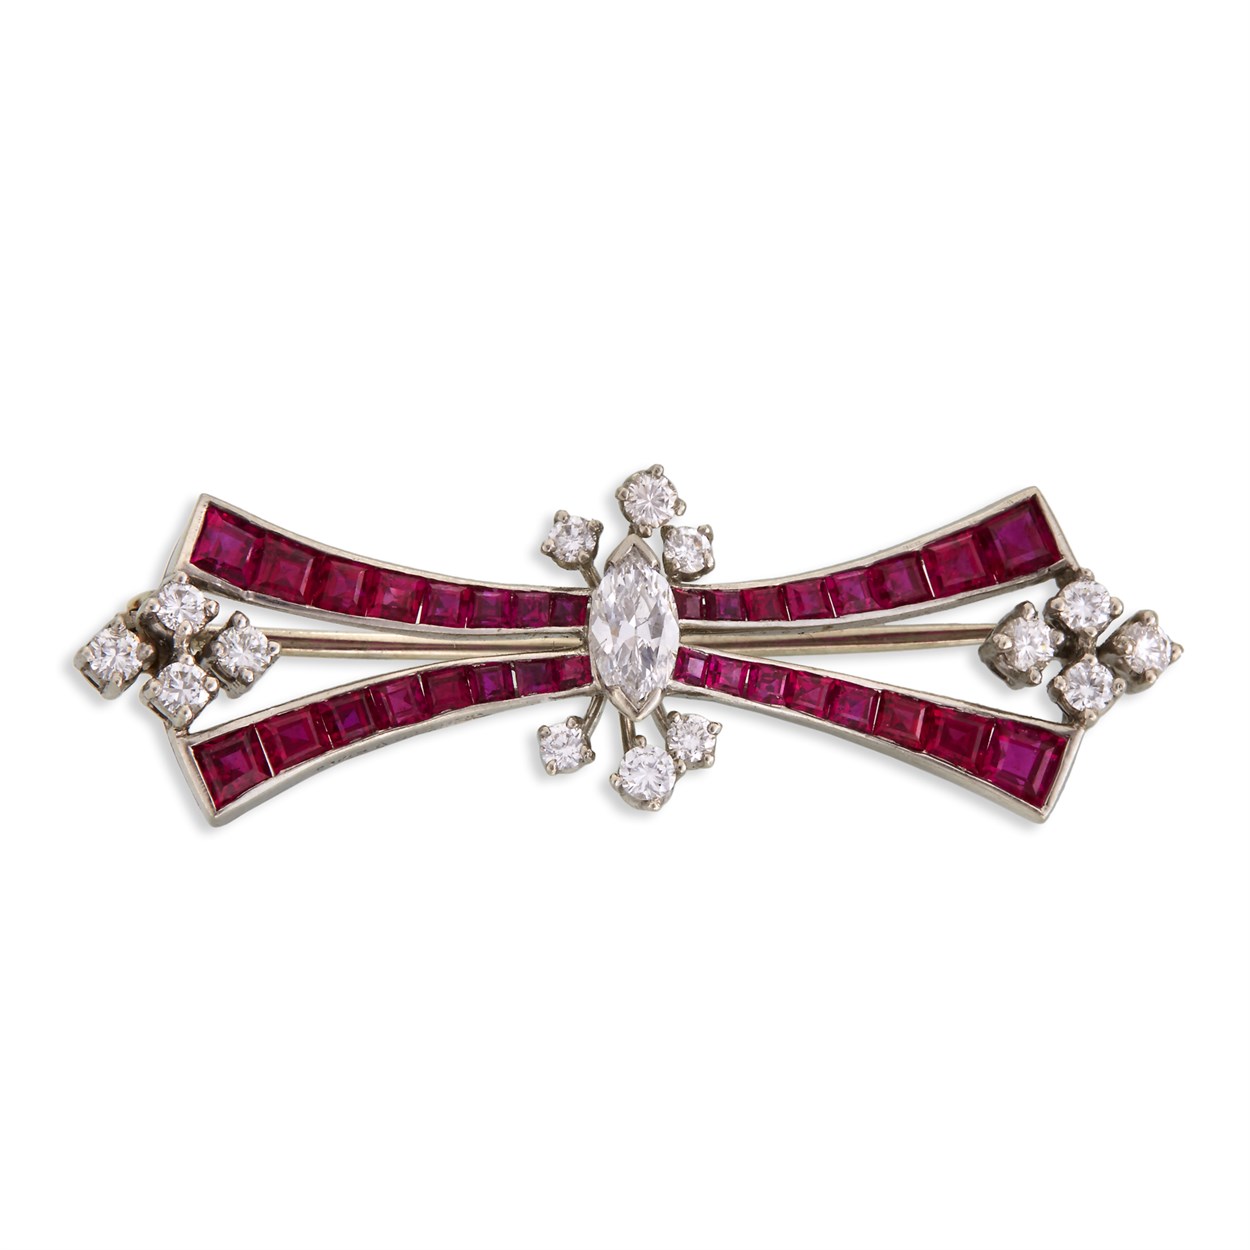 Lot 27 - A diamond, ruby, and platinum brooch, J. E. Caldwell & Co.